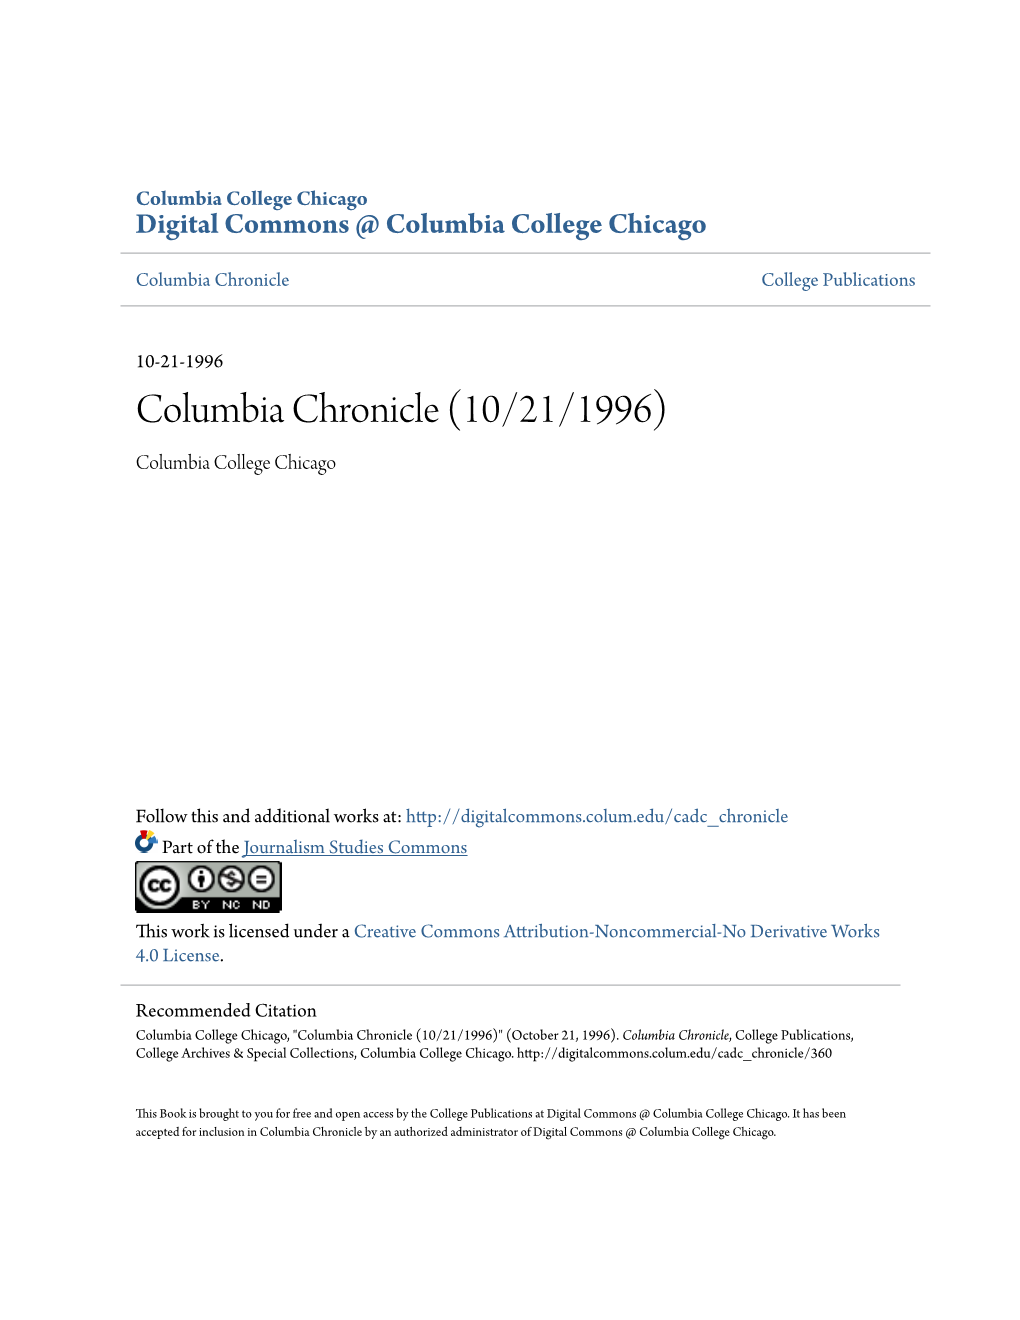 Columbia Chronicle (10/21/1996) Columbia College Chicago